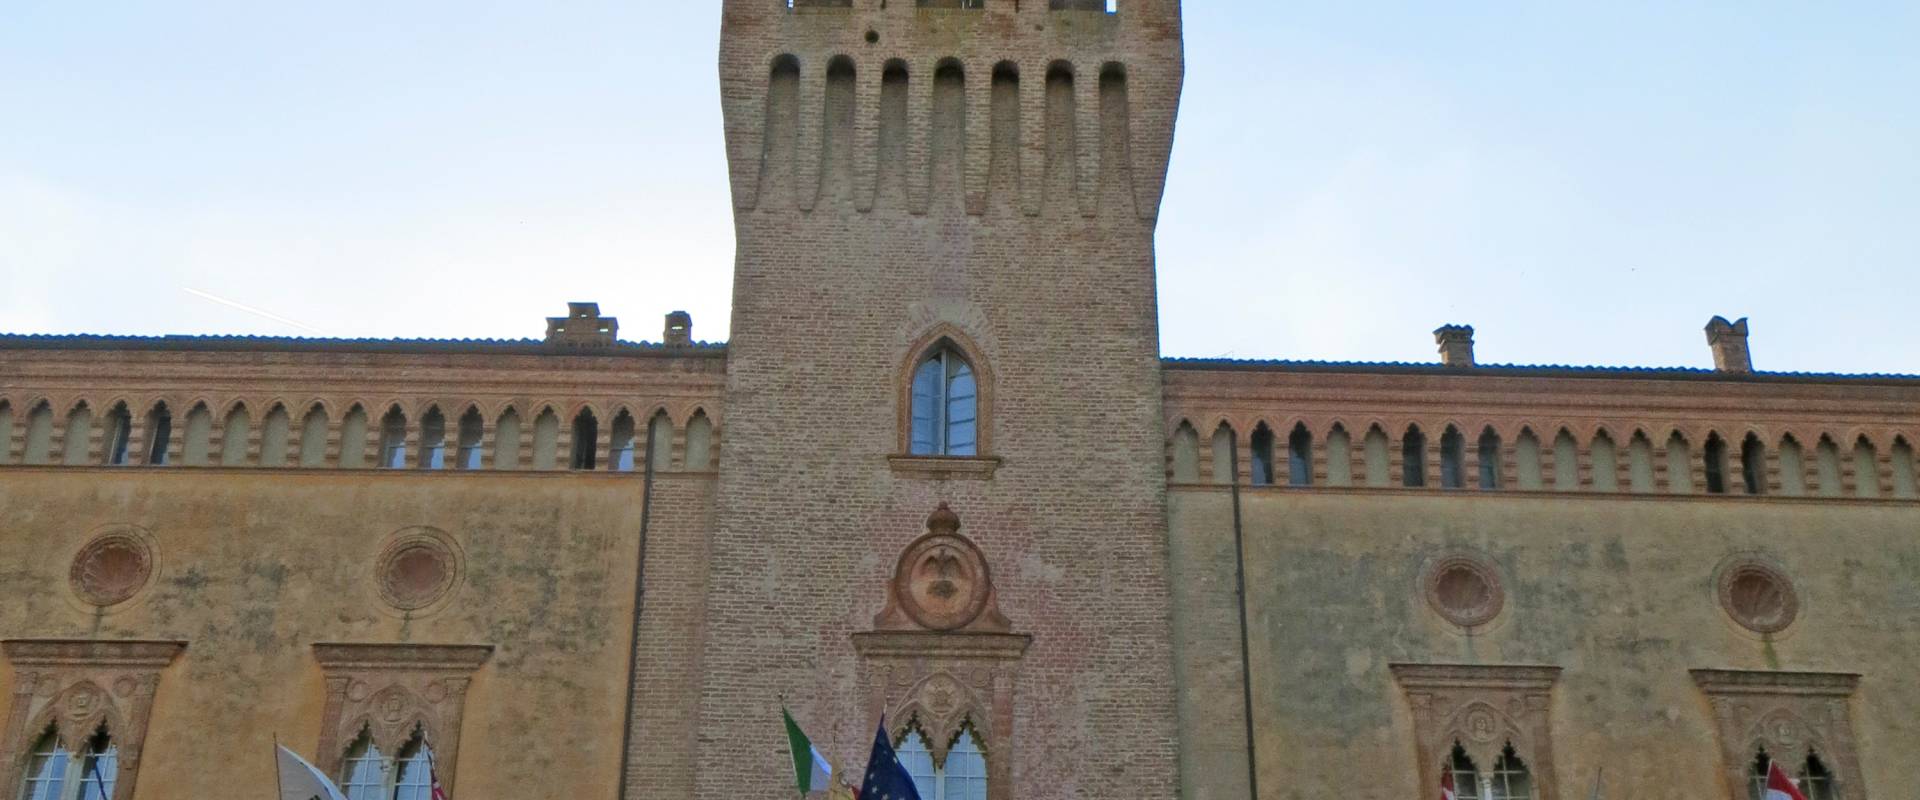 Rocca Pallavicino (Busseto) - mastio 2019-06-19 photo by Parma198